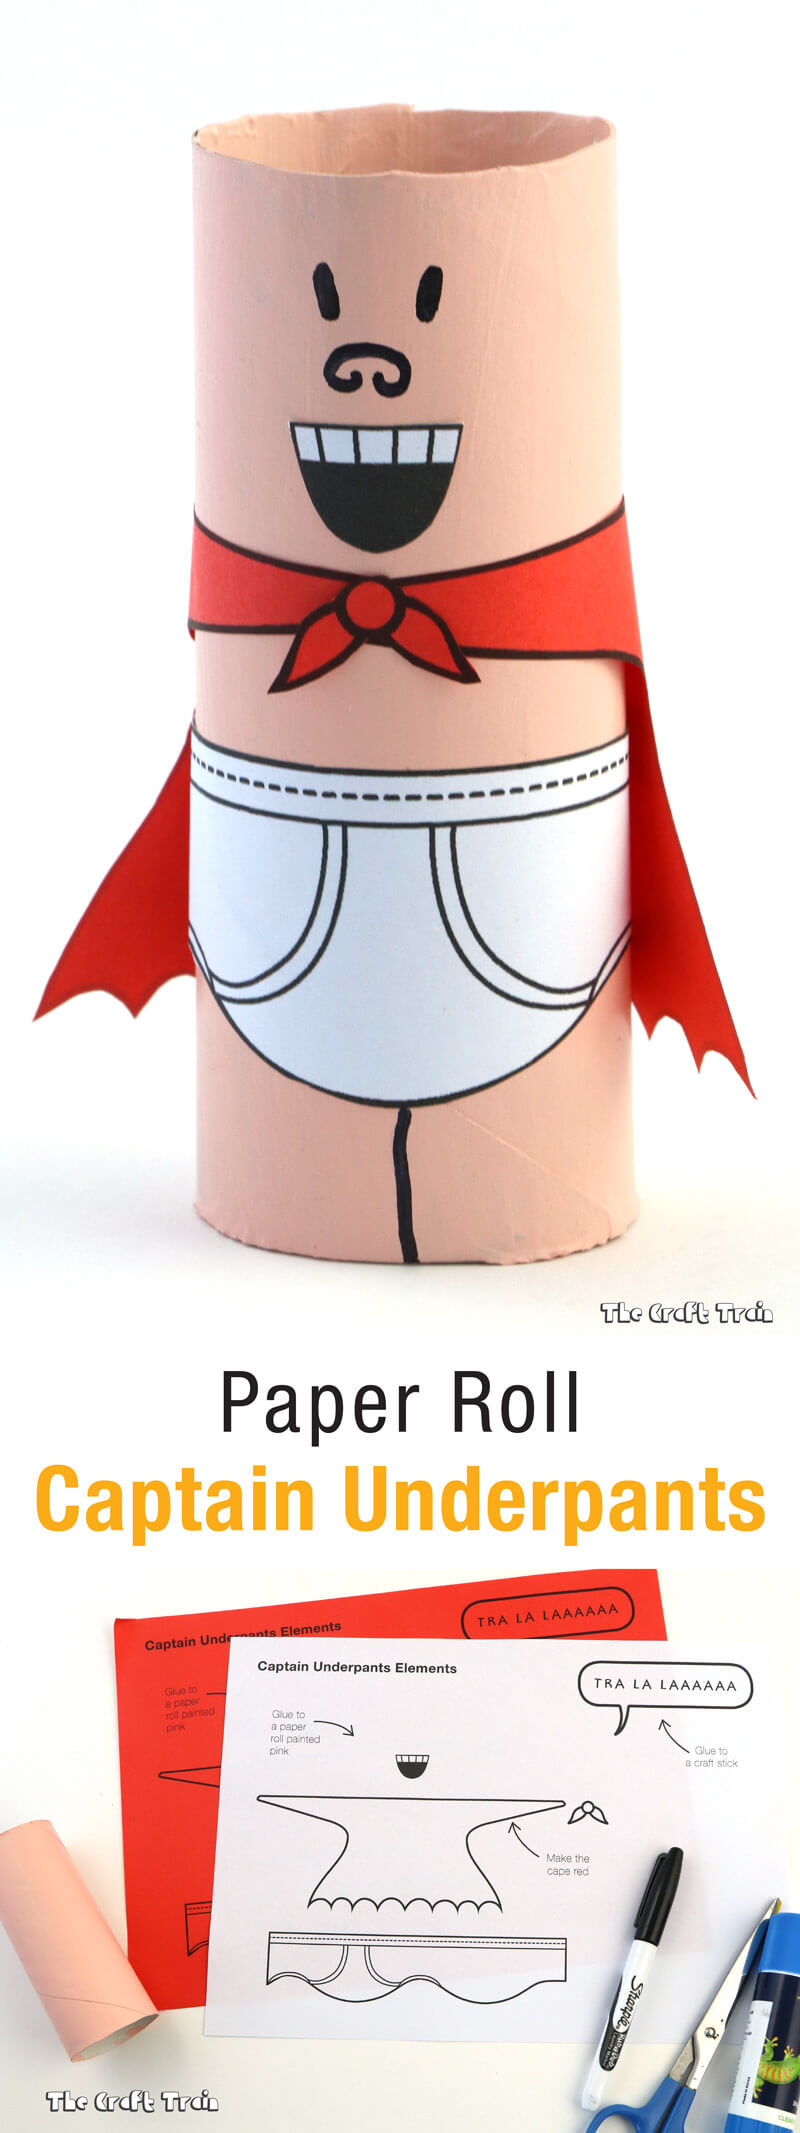 Captain underpants craft fro kids. Make a paper roll Captain Underpants! #paperrollcraft #kidscraft #superheroes #captainunderpants 